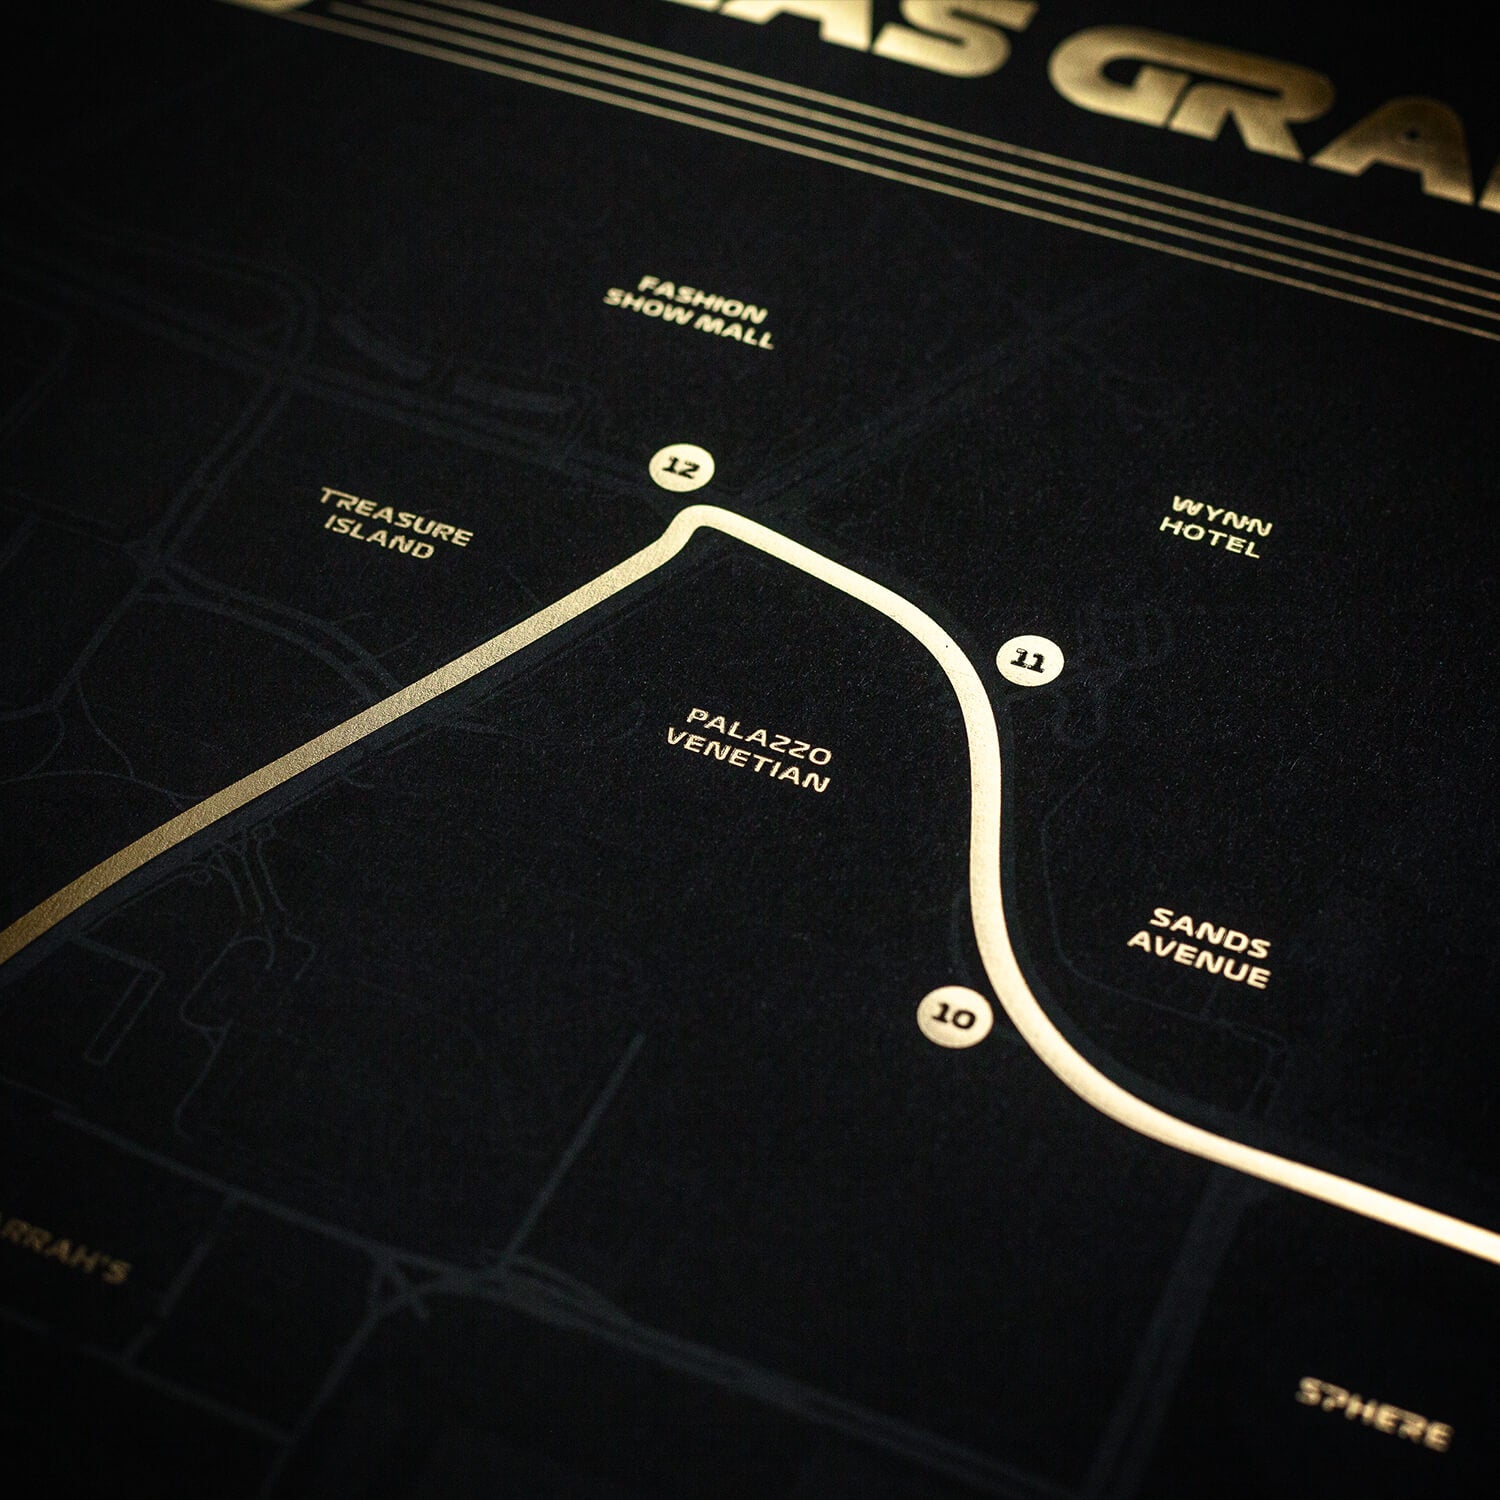 Las Vegas Strip Circuit - Formula 1 - 2023 | Collector's Edition